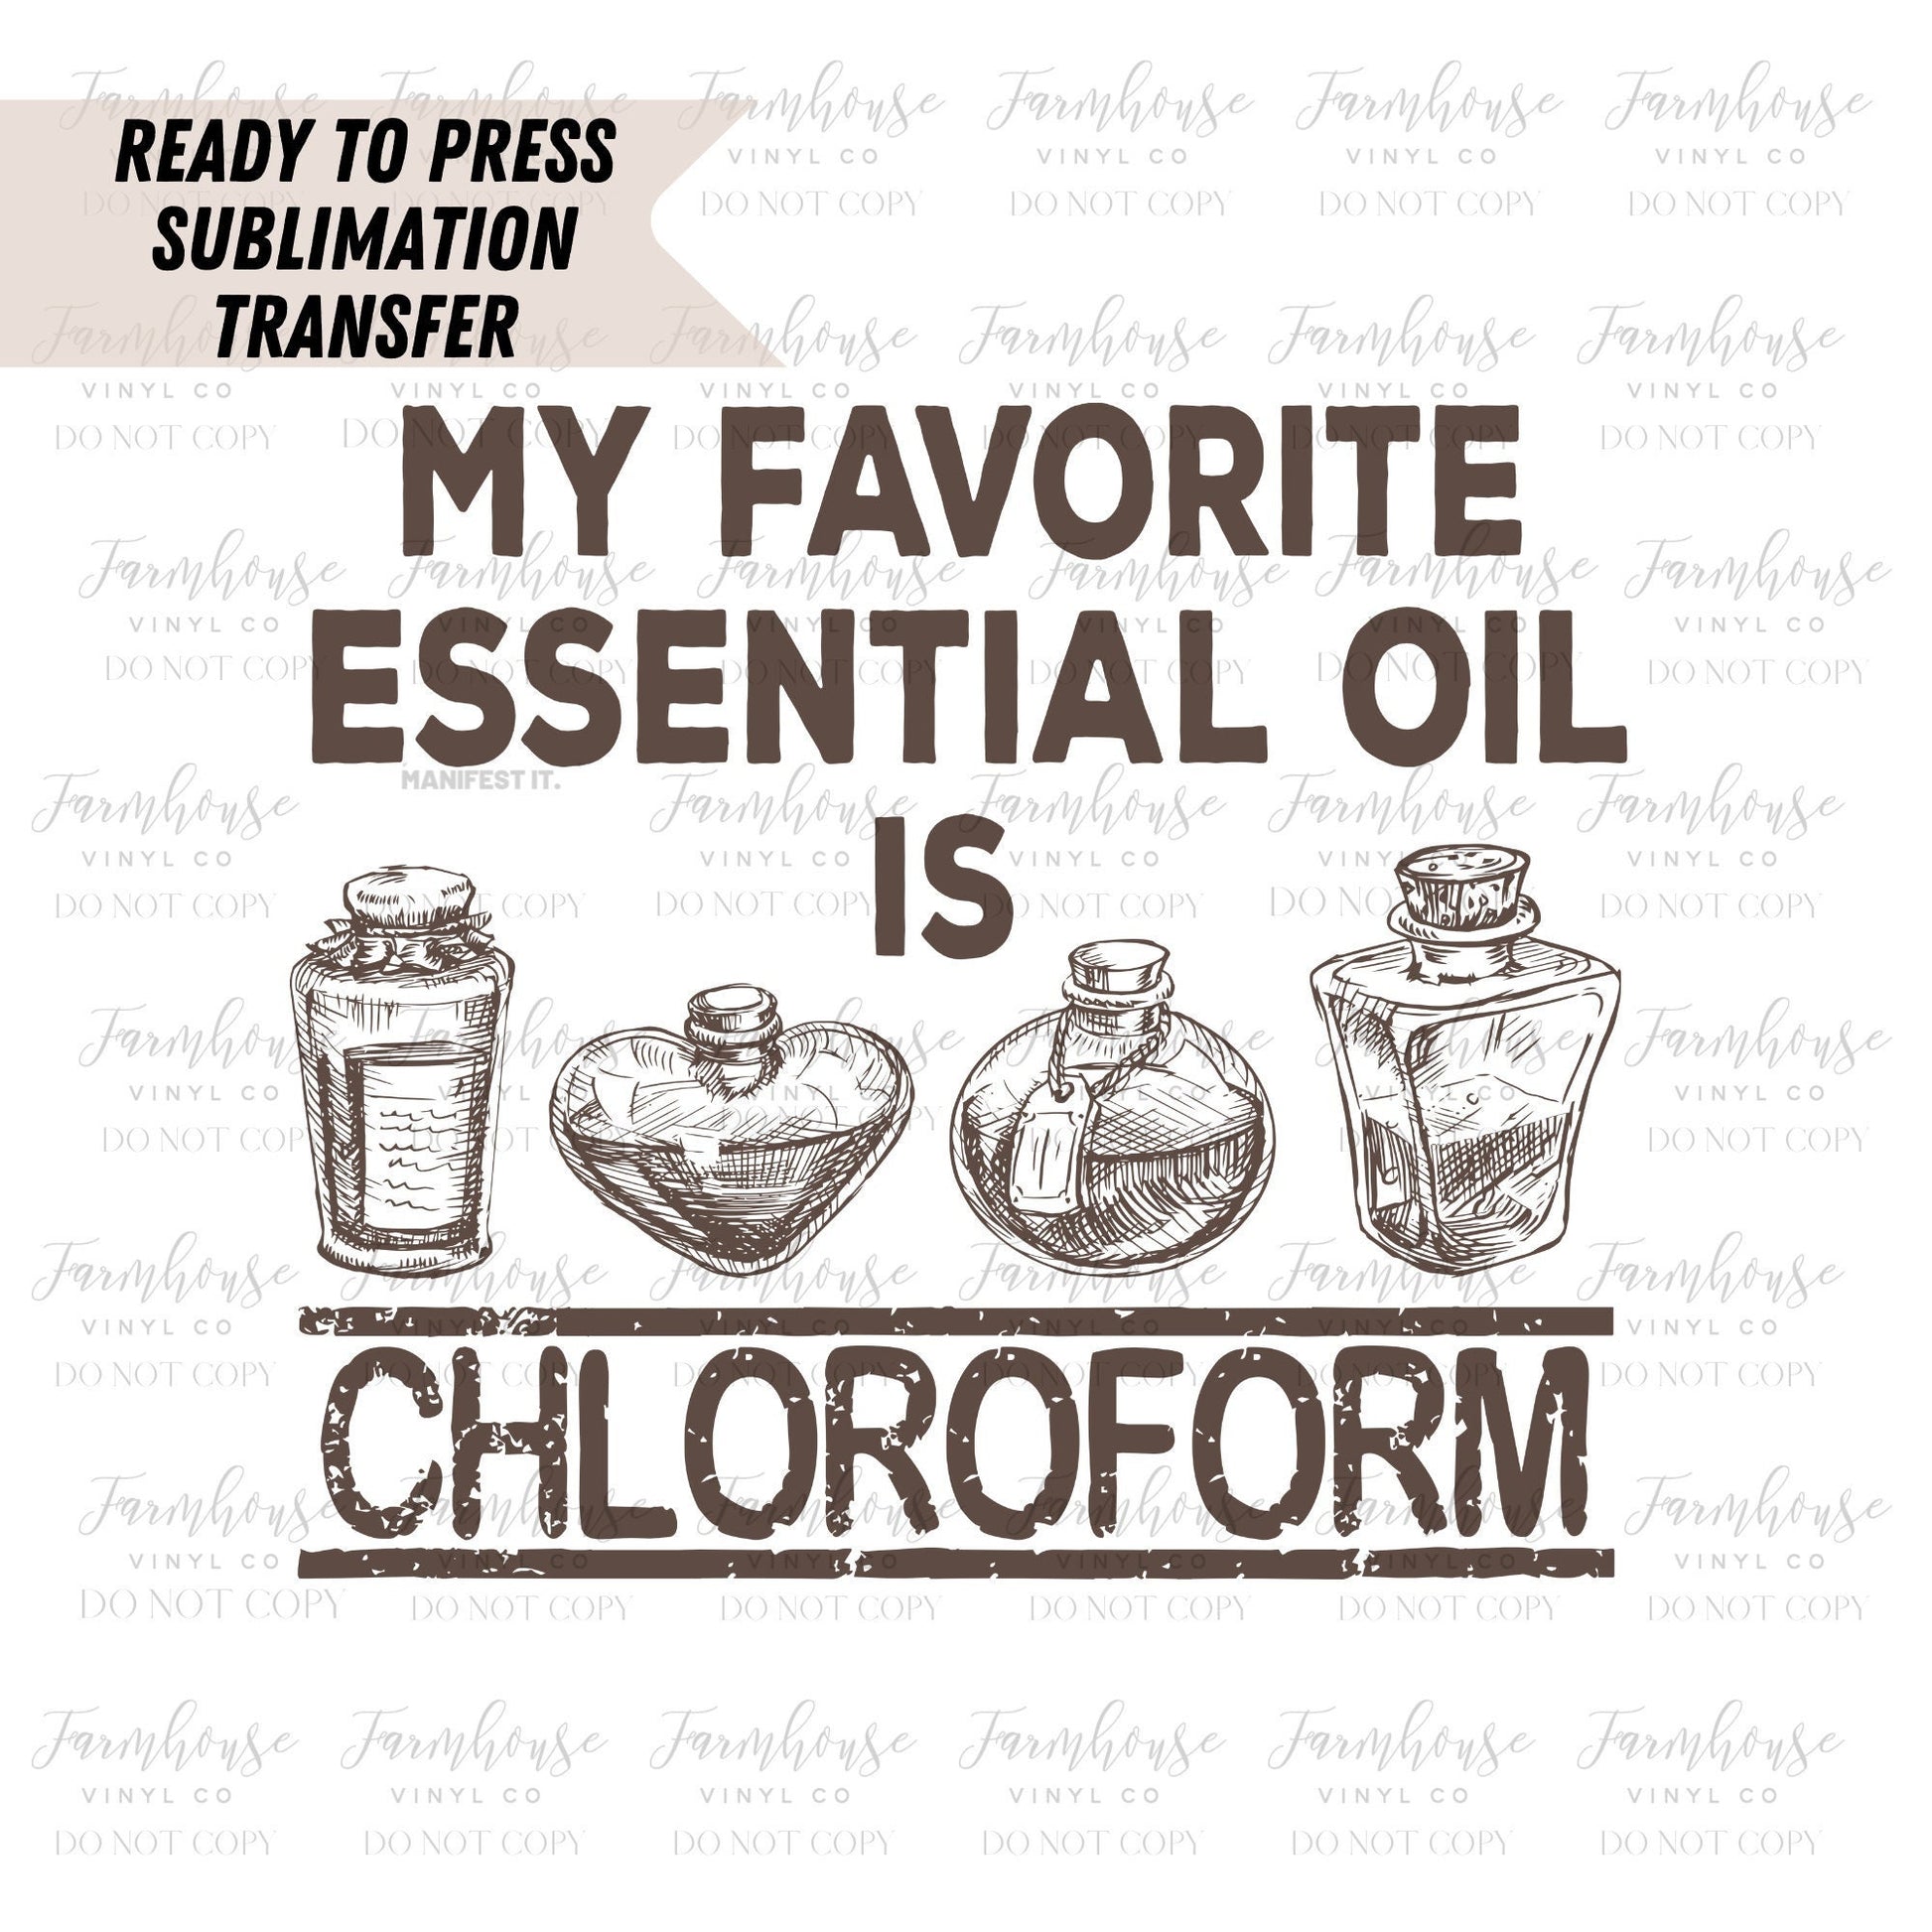 My Favorite Essential Oil is Chloroform Ready To Press Sublimation Transfer - Farmhouse Vinyl Co